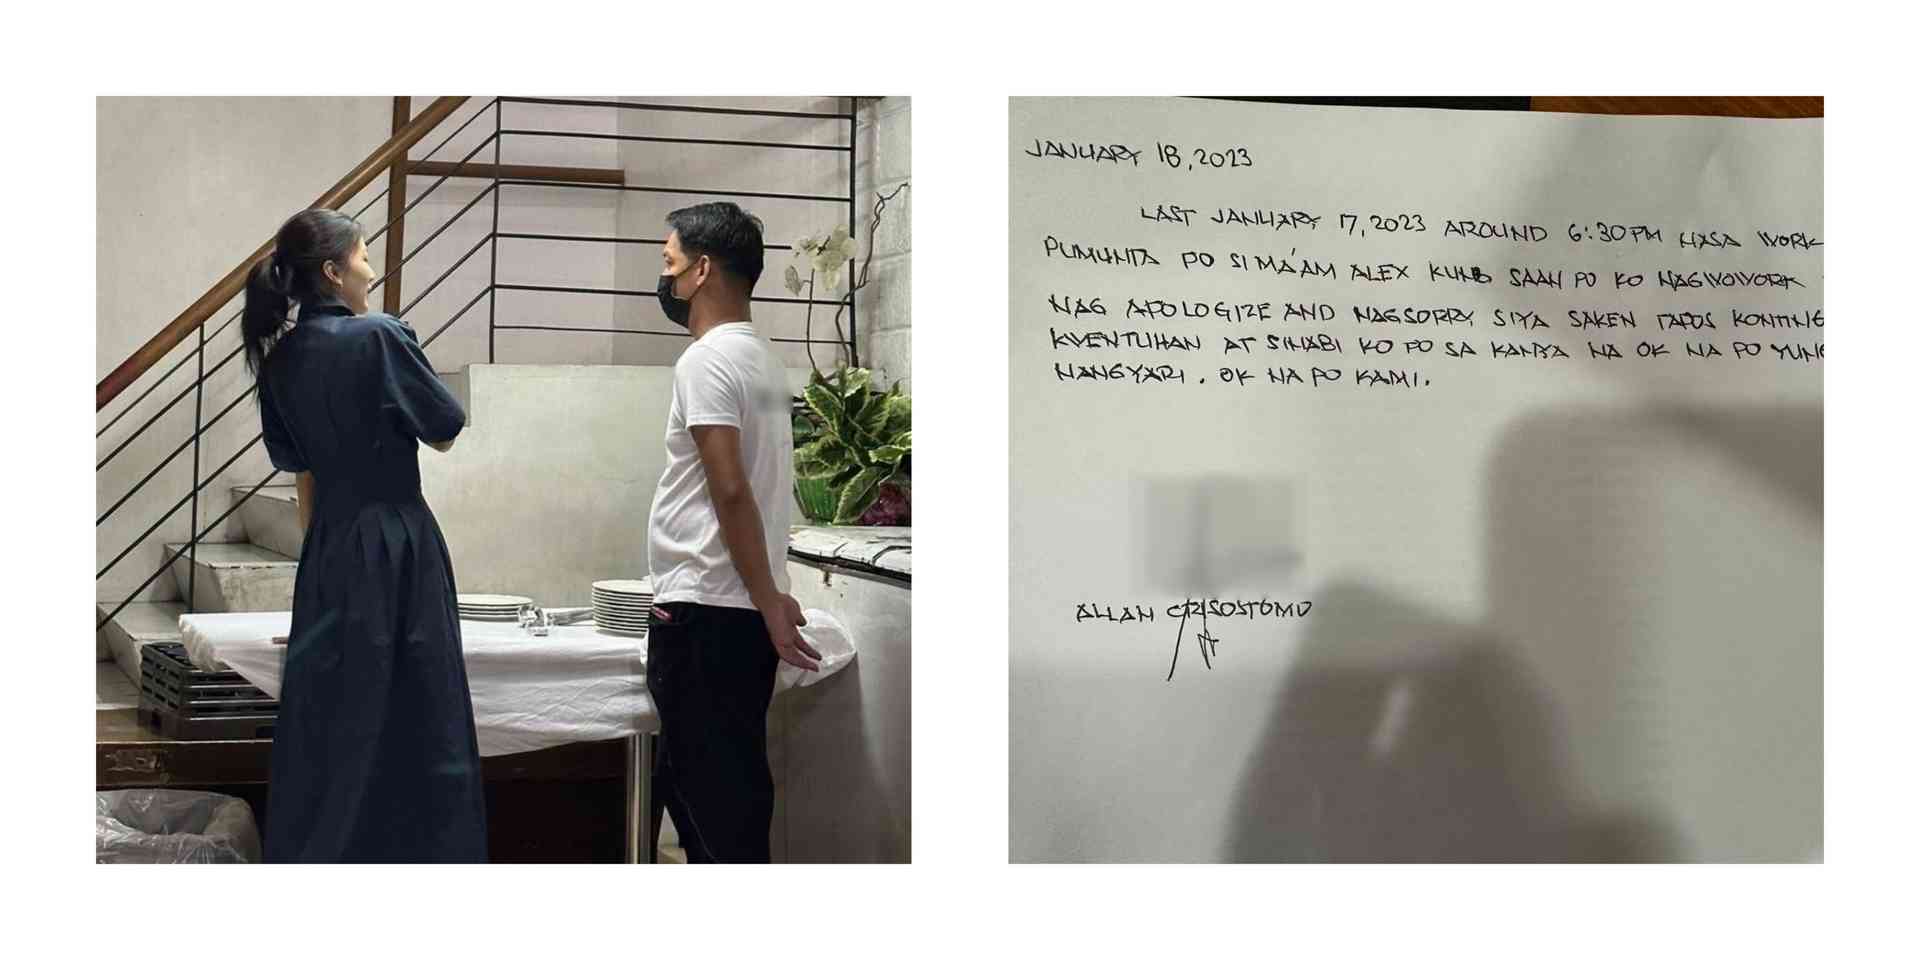 Alex Gonzaga apologizes to waiter after cake-smearing video